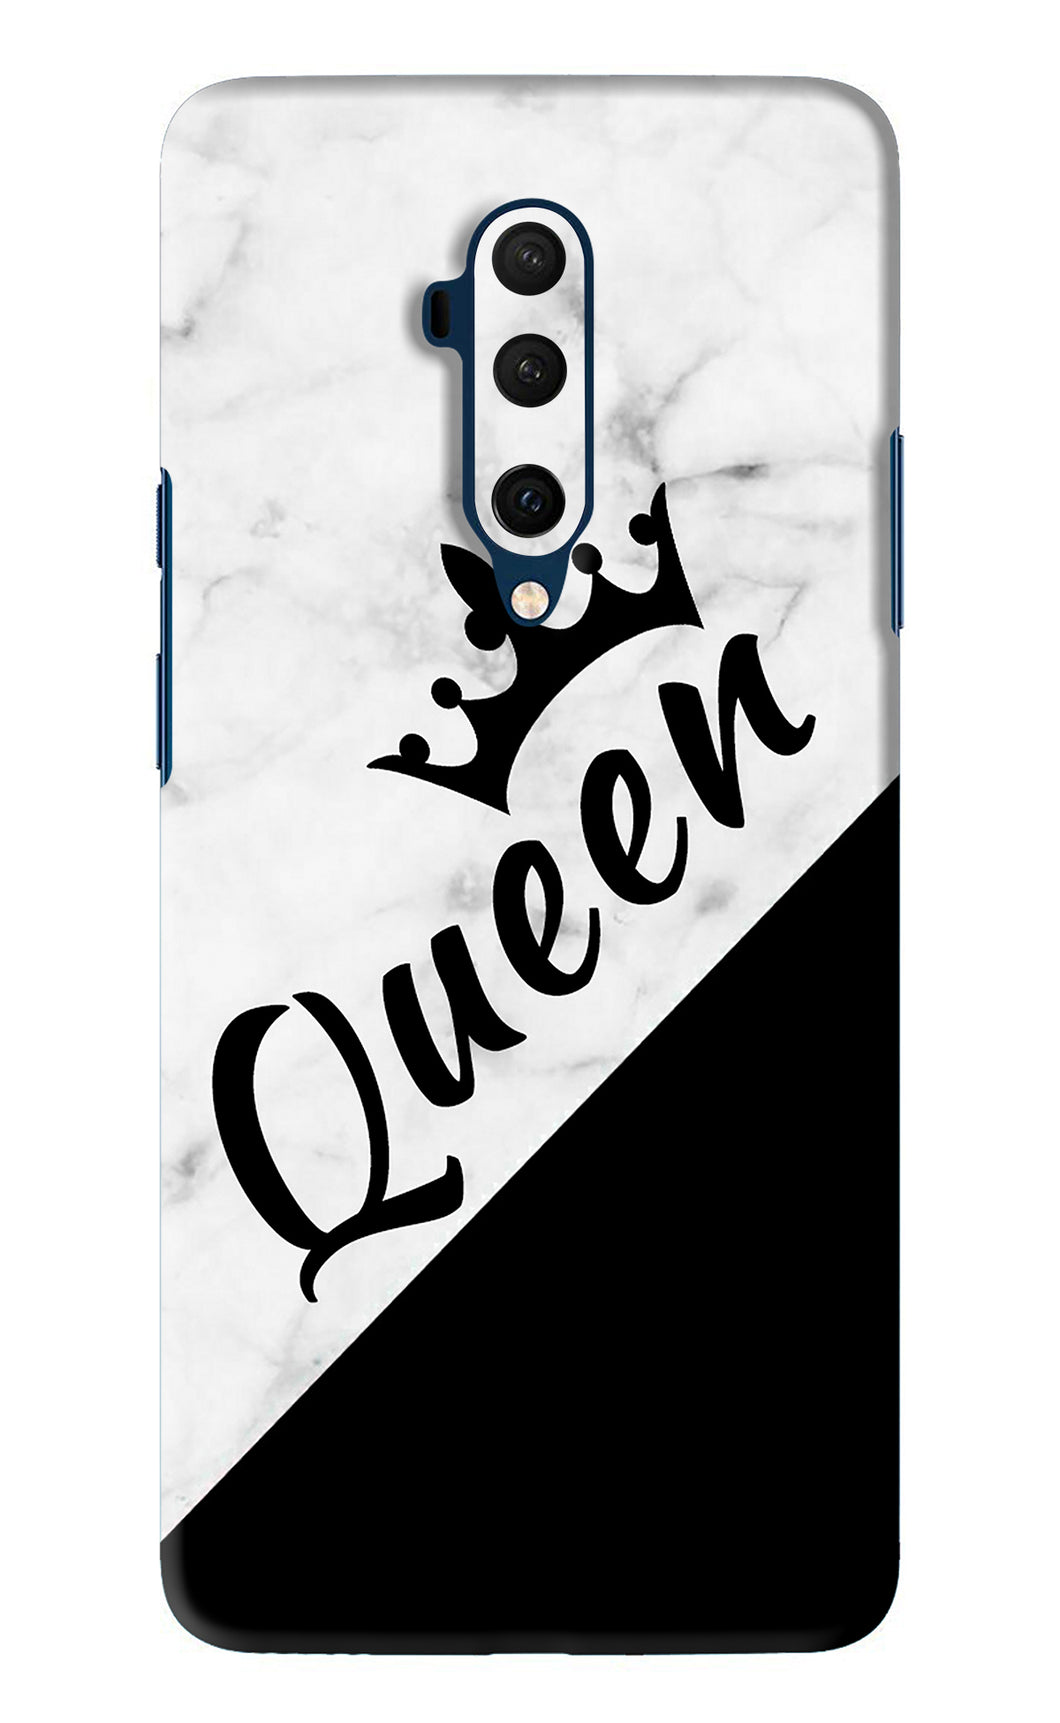 Queen OnePlus 7T Pro Back Skin Wrap